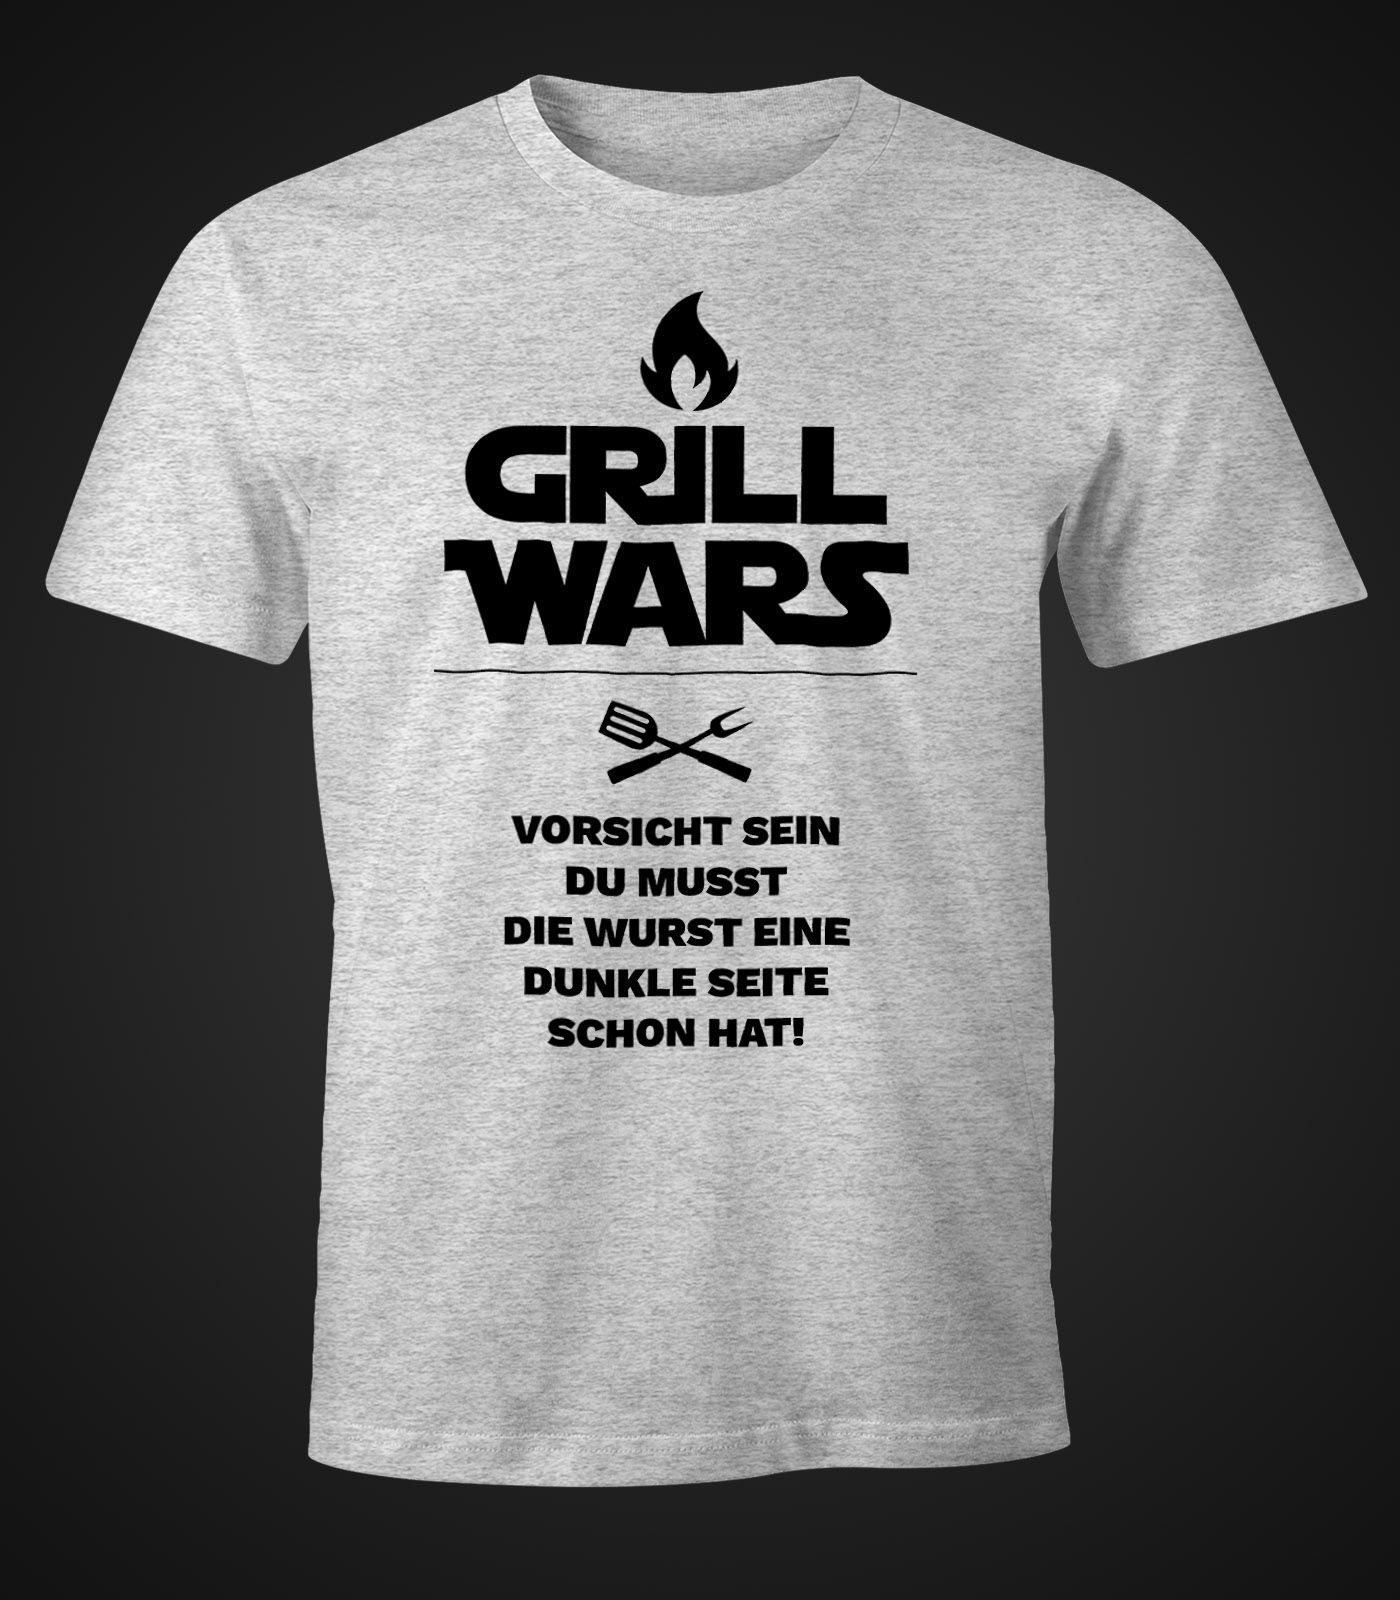 Wars mit mit Print Spruch T-Shirt Print-Shirt Herren Moonworks® grau Fun-Shirt MoonWorks Grill